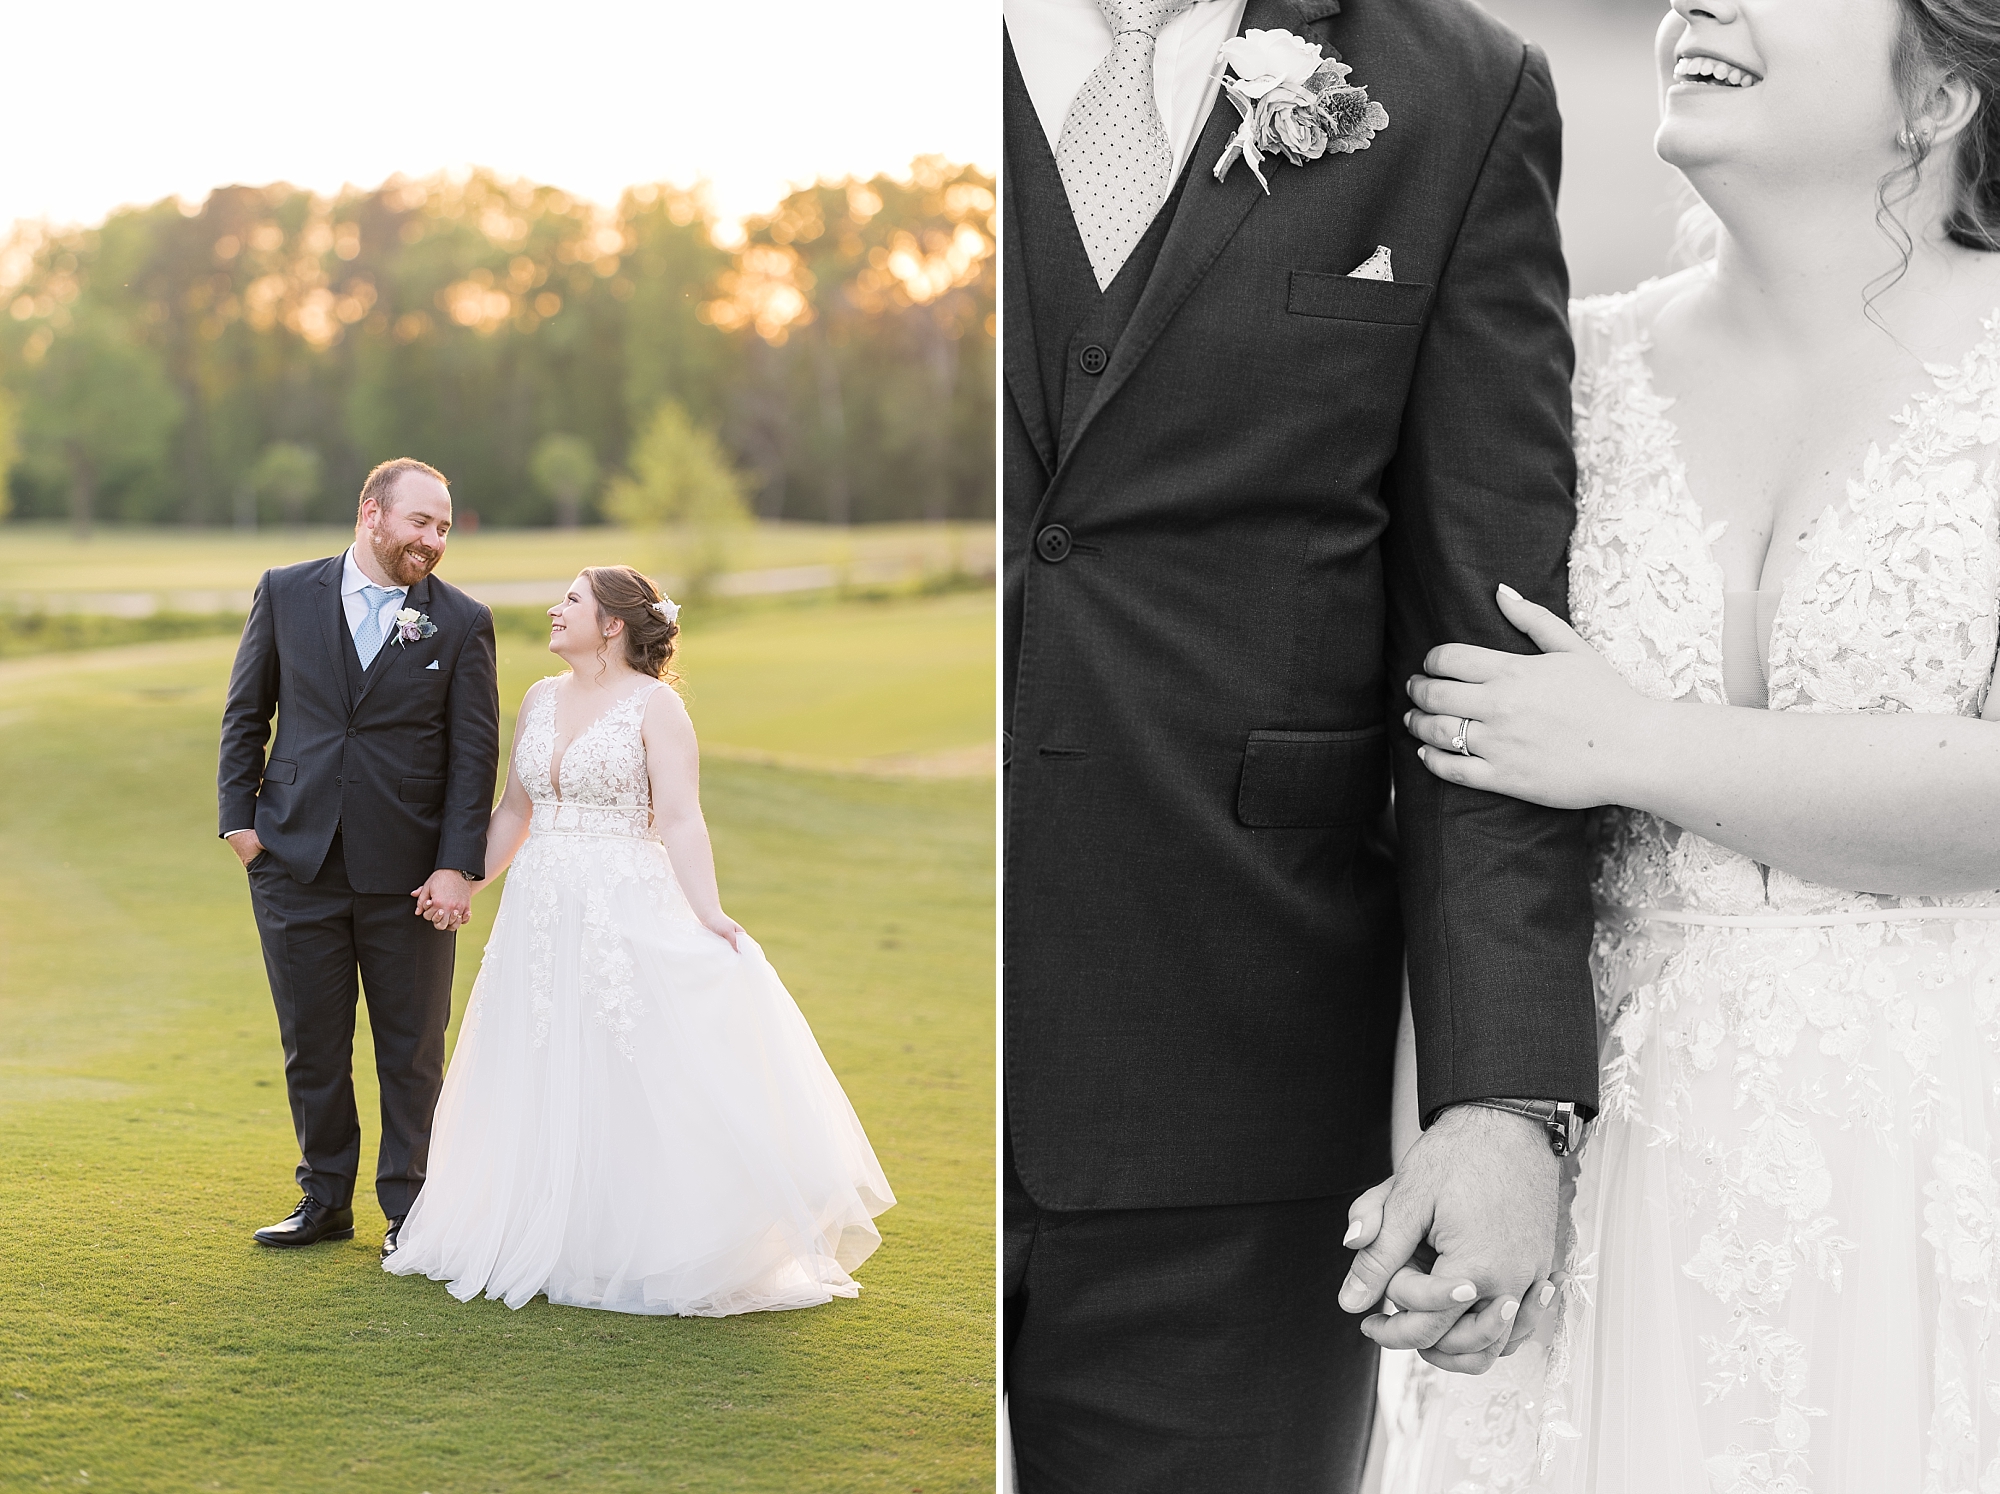 12 Oaks Golf Course Wedding - bride and groom - Raleigh NC Wedding Photographer - Sarah Hinckley Photography